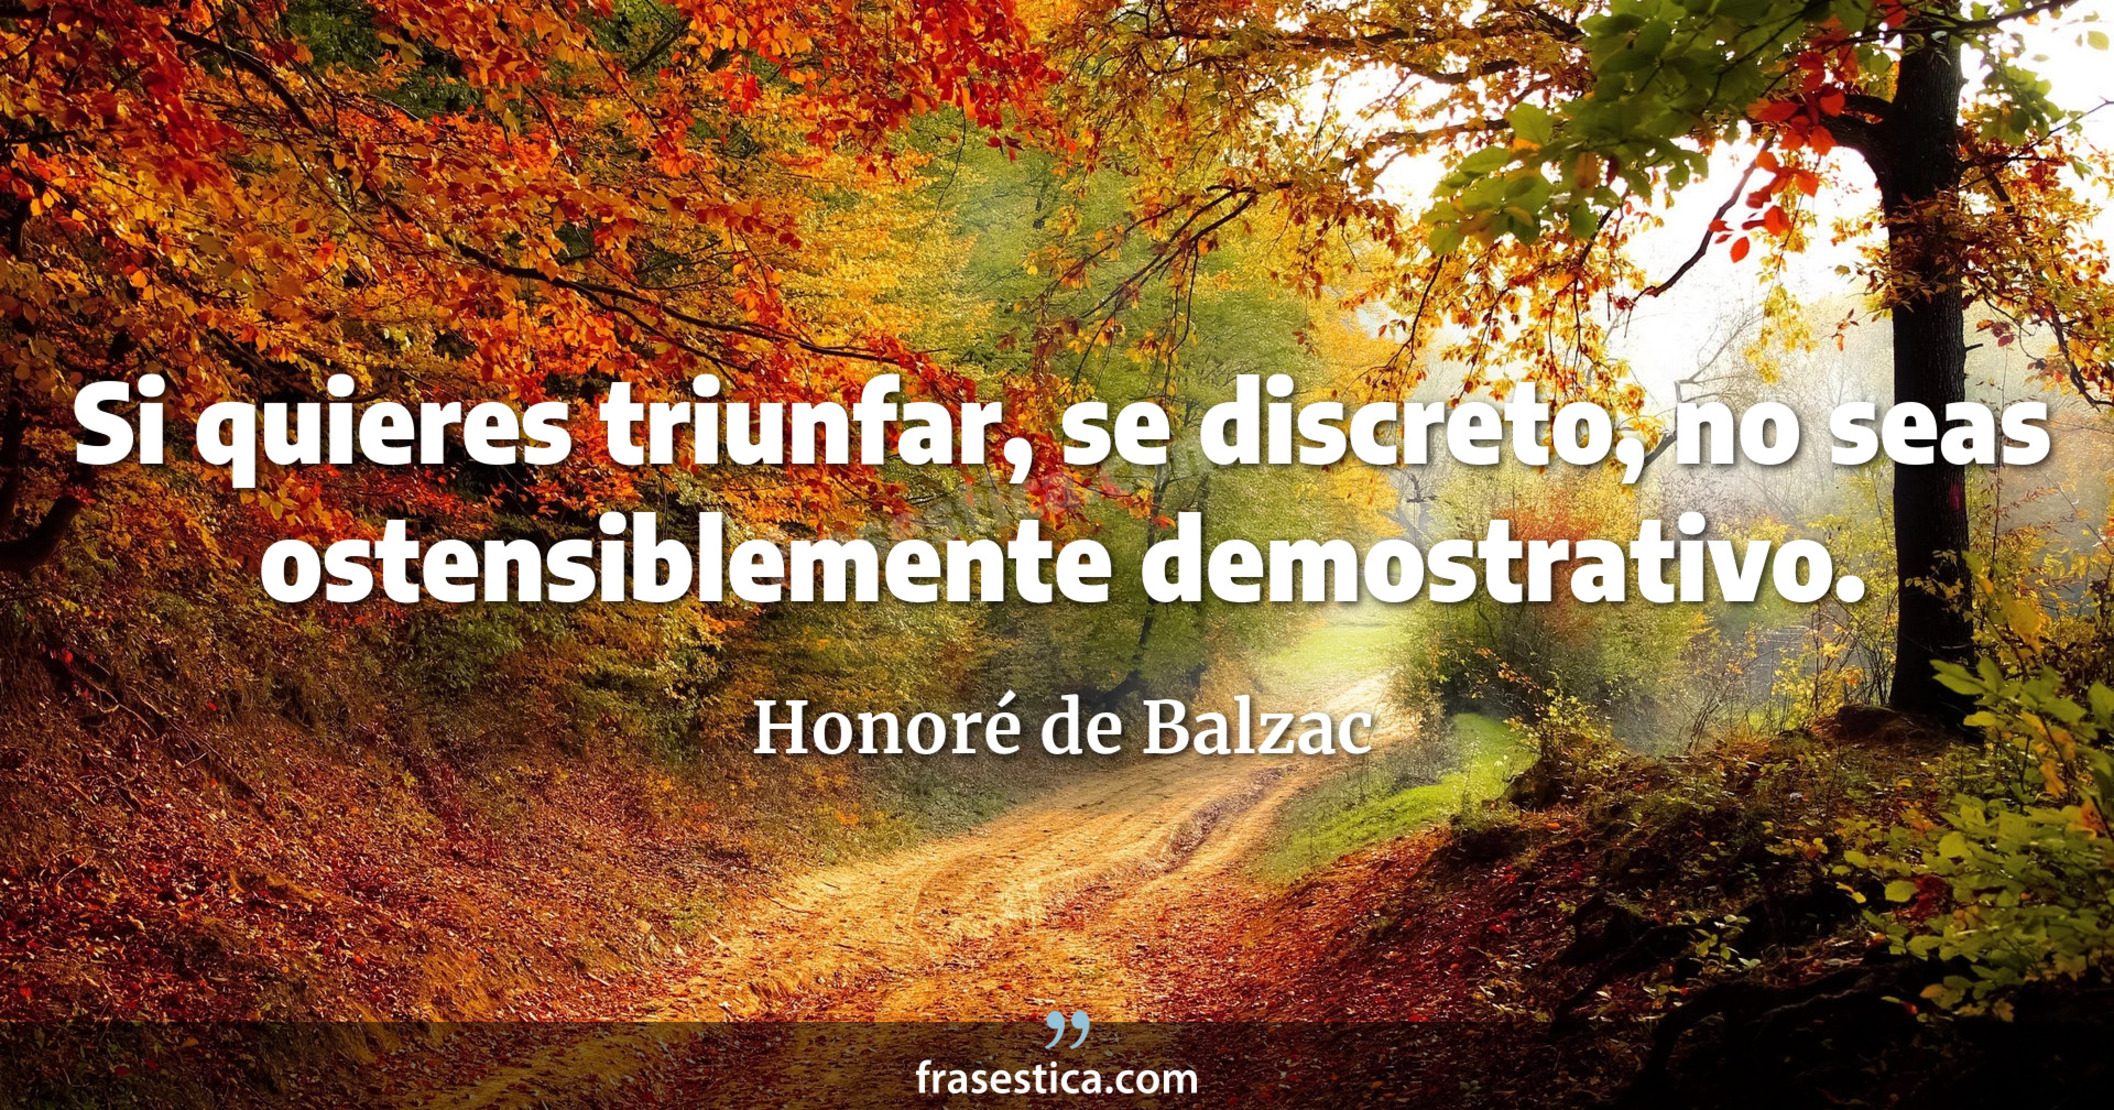 Si quieres triunfar, se discreto, no seas ostensiblemente demostrativo. - Honoré de Balzac